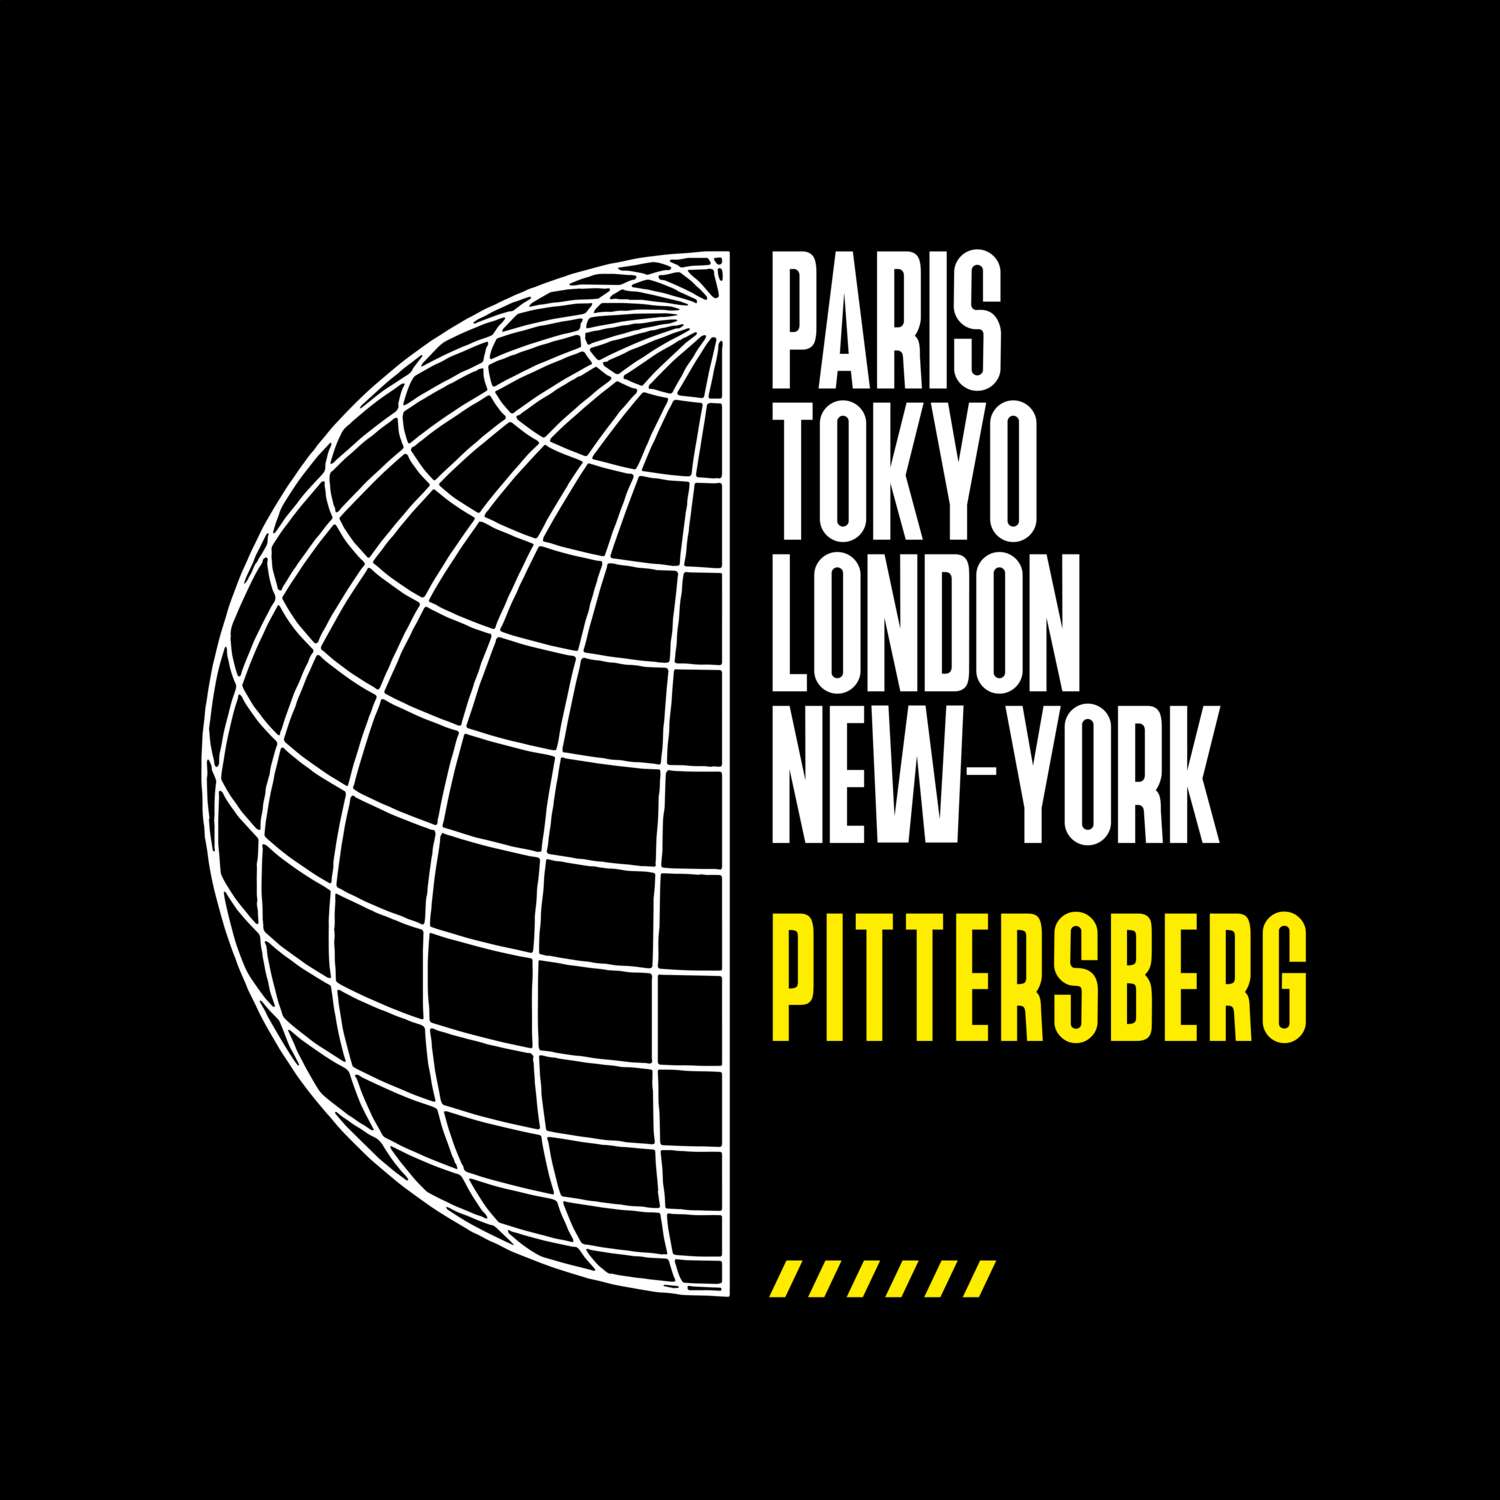 Pittersberg T-Shirt »Paris Tokyo London«